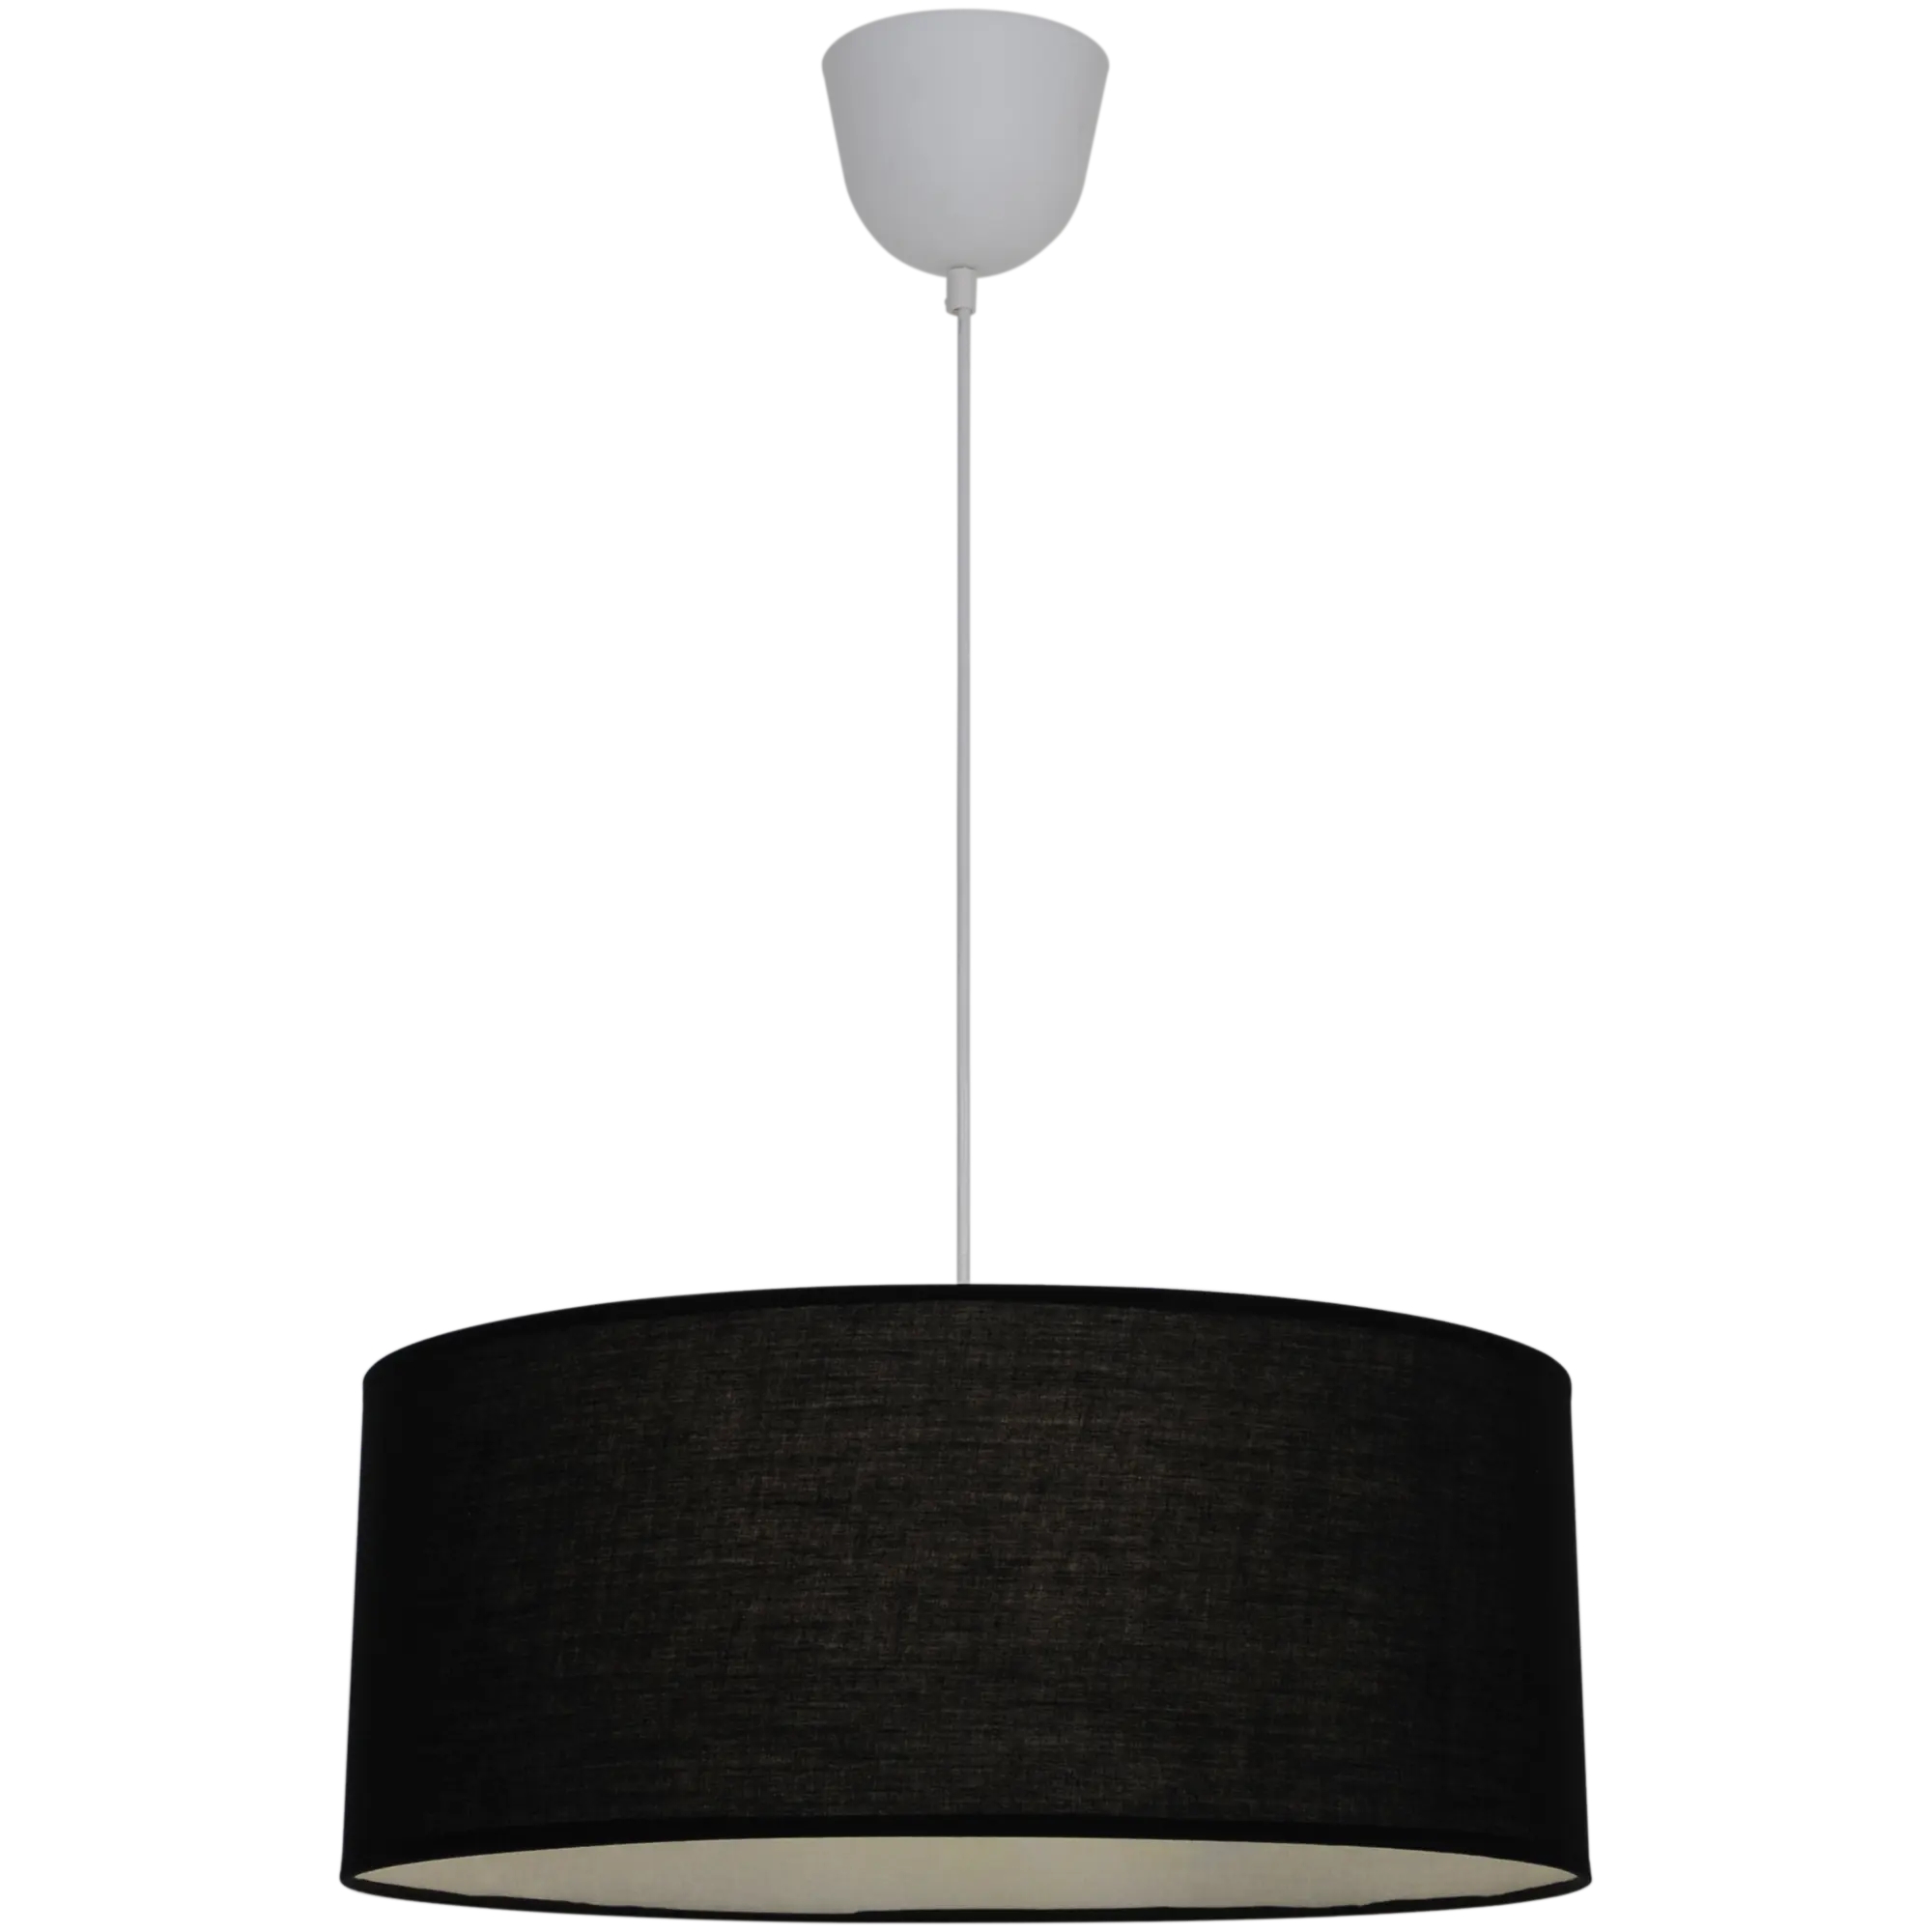 Lampadario Moderno Sitia nero in cotone, D. 48 cm, L. 19 cm, 3 luci, INSPIRE - 5